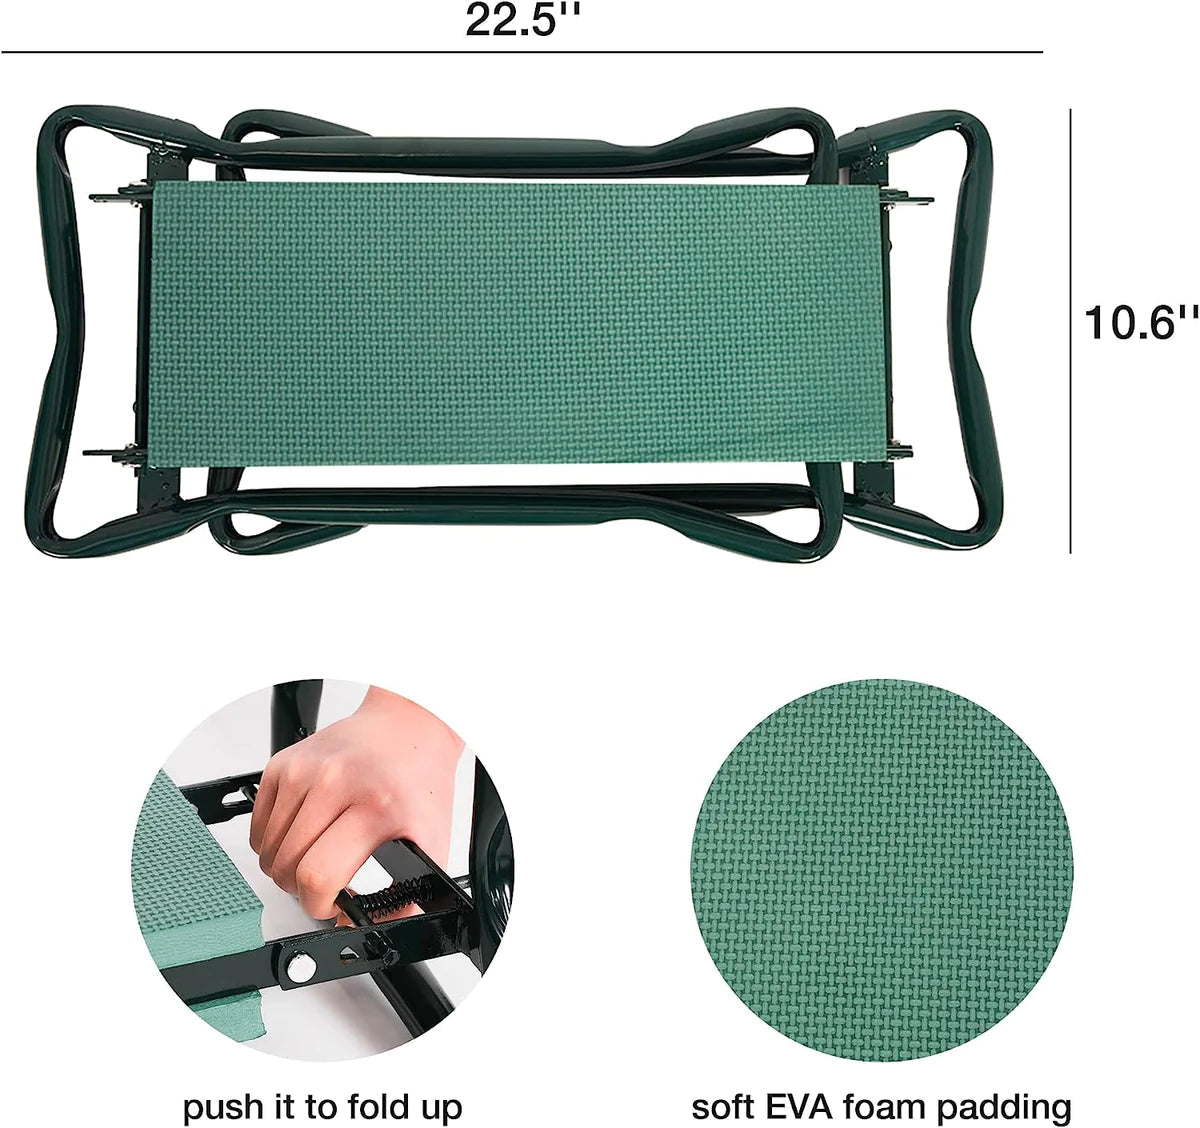 Portable Foldable Garden Kneeler Bench with Tools Bag, Green